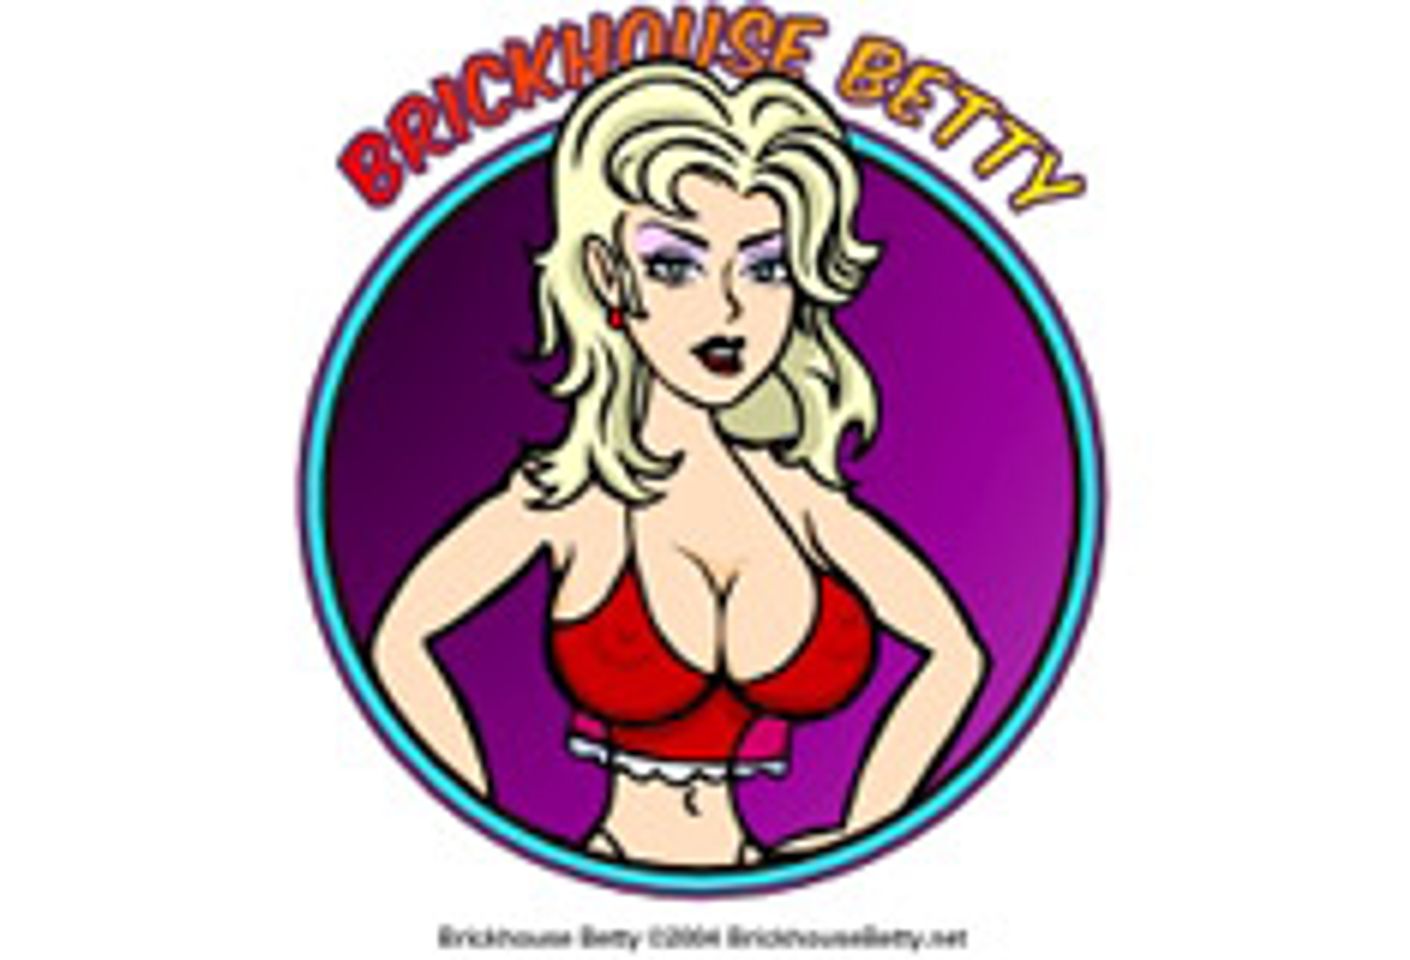 Betty brickhouse